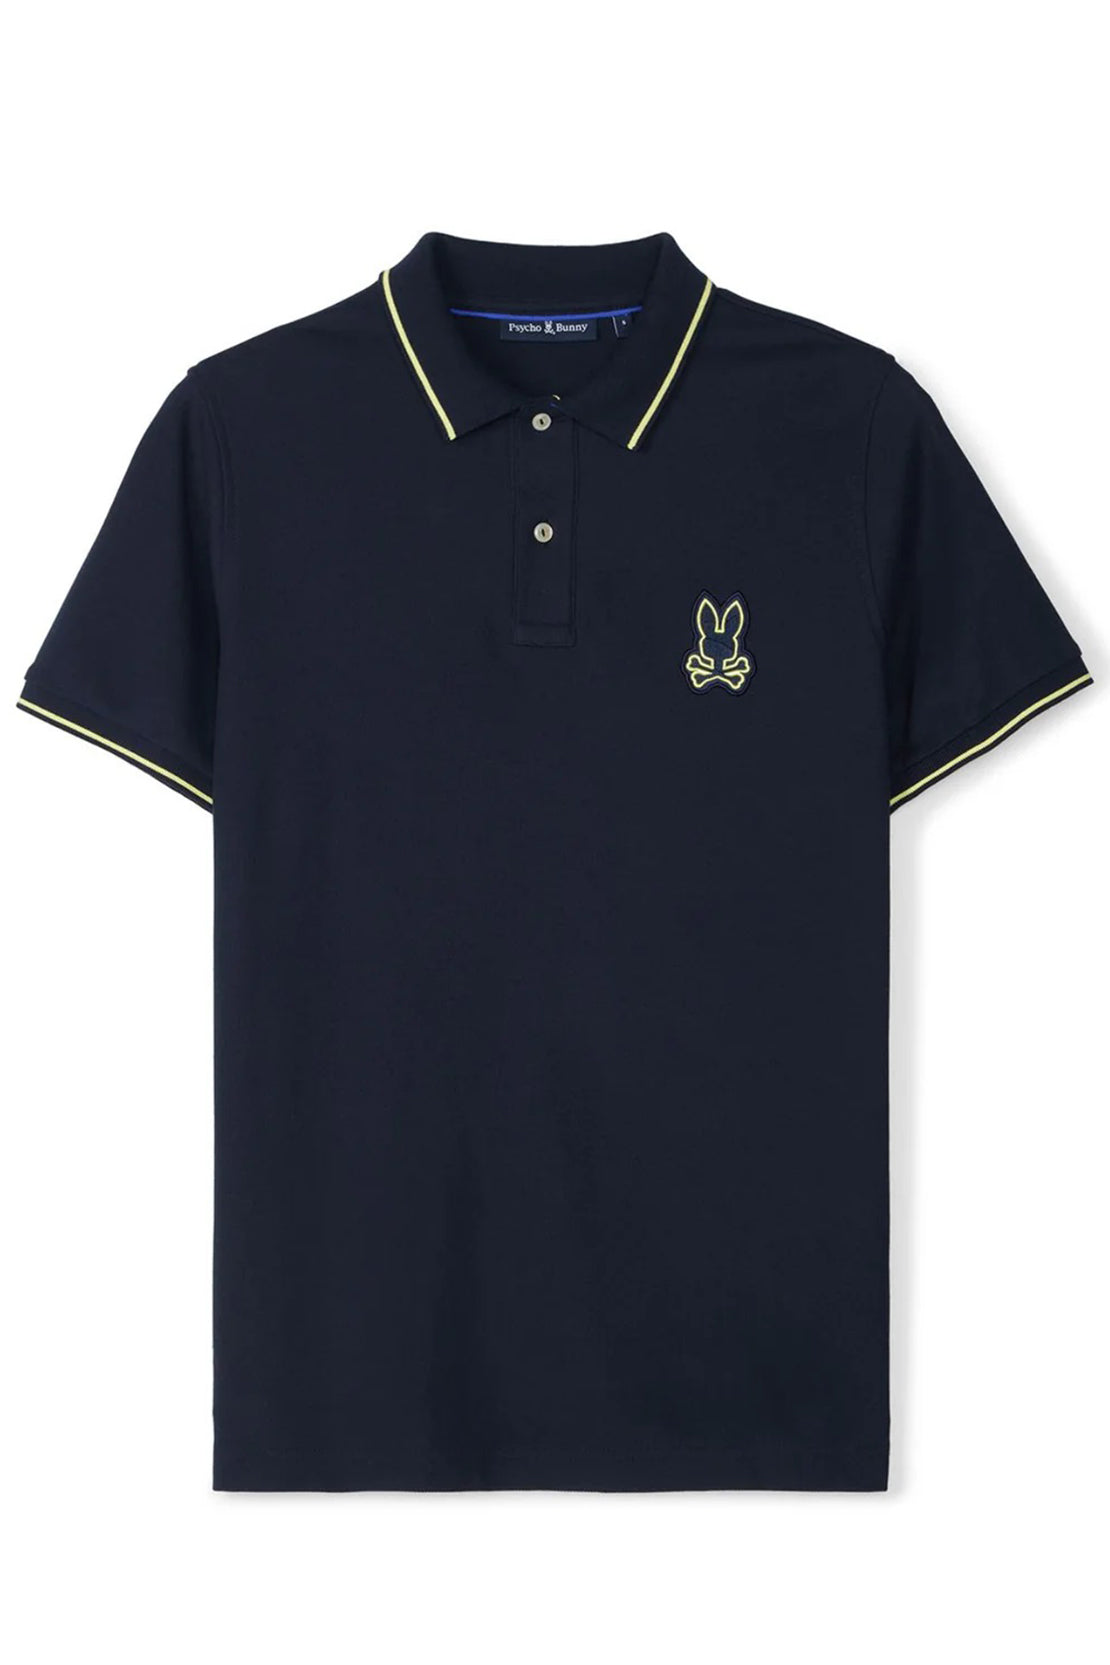 PSYCHO BUNNY - LENOX Pique Polo Shirt In Navy Blue B6K138B200 NVY